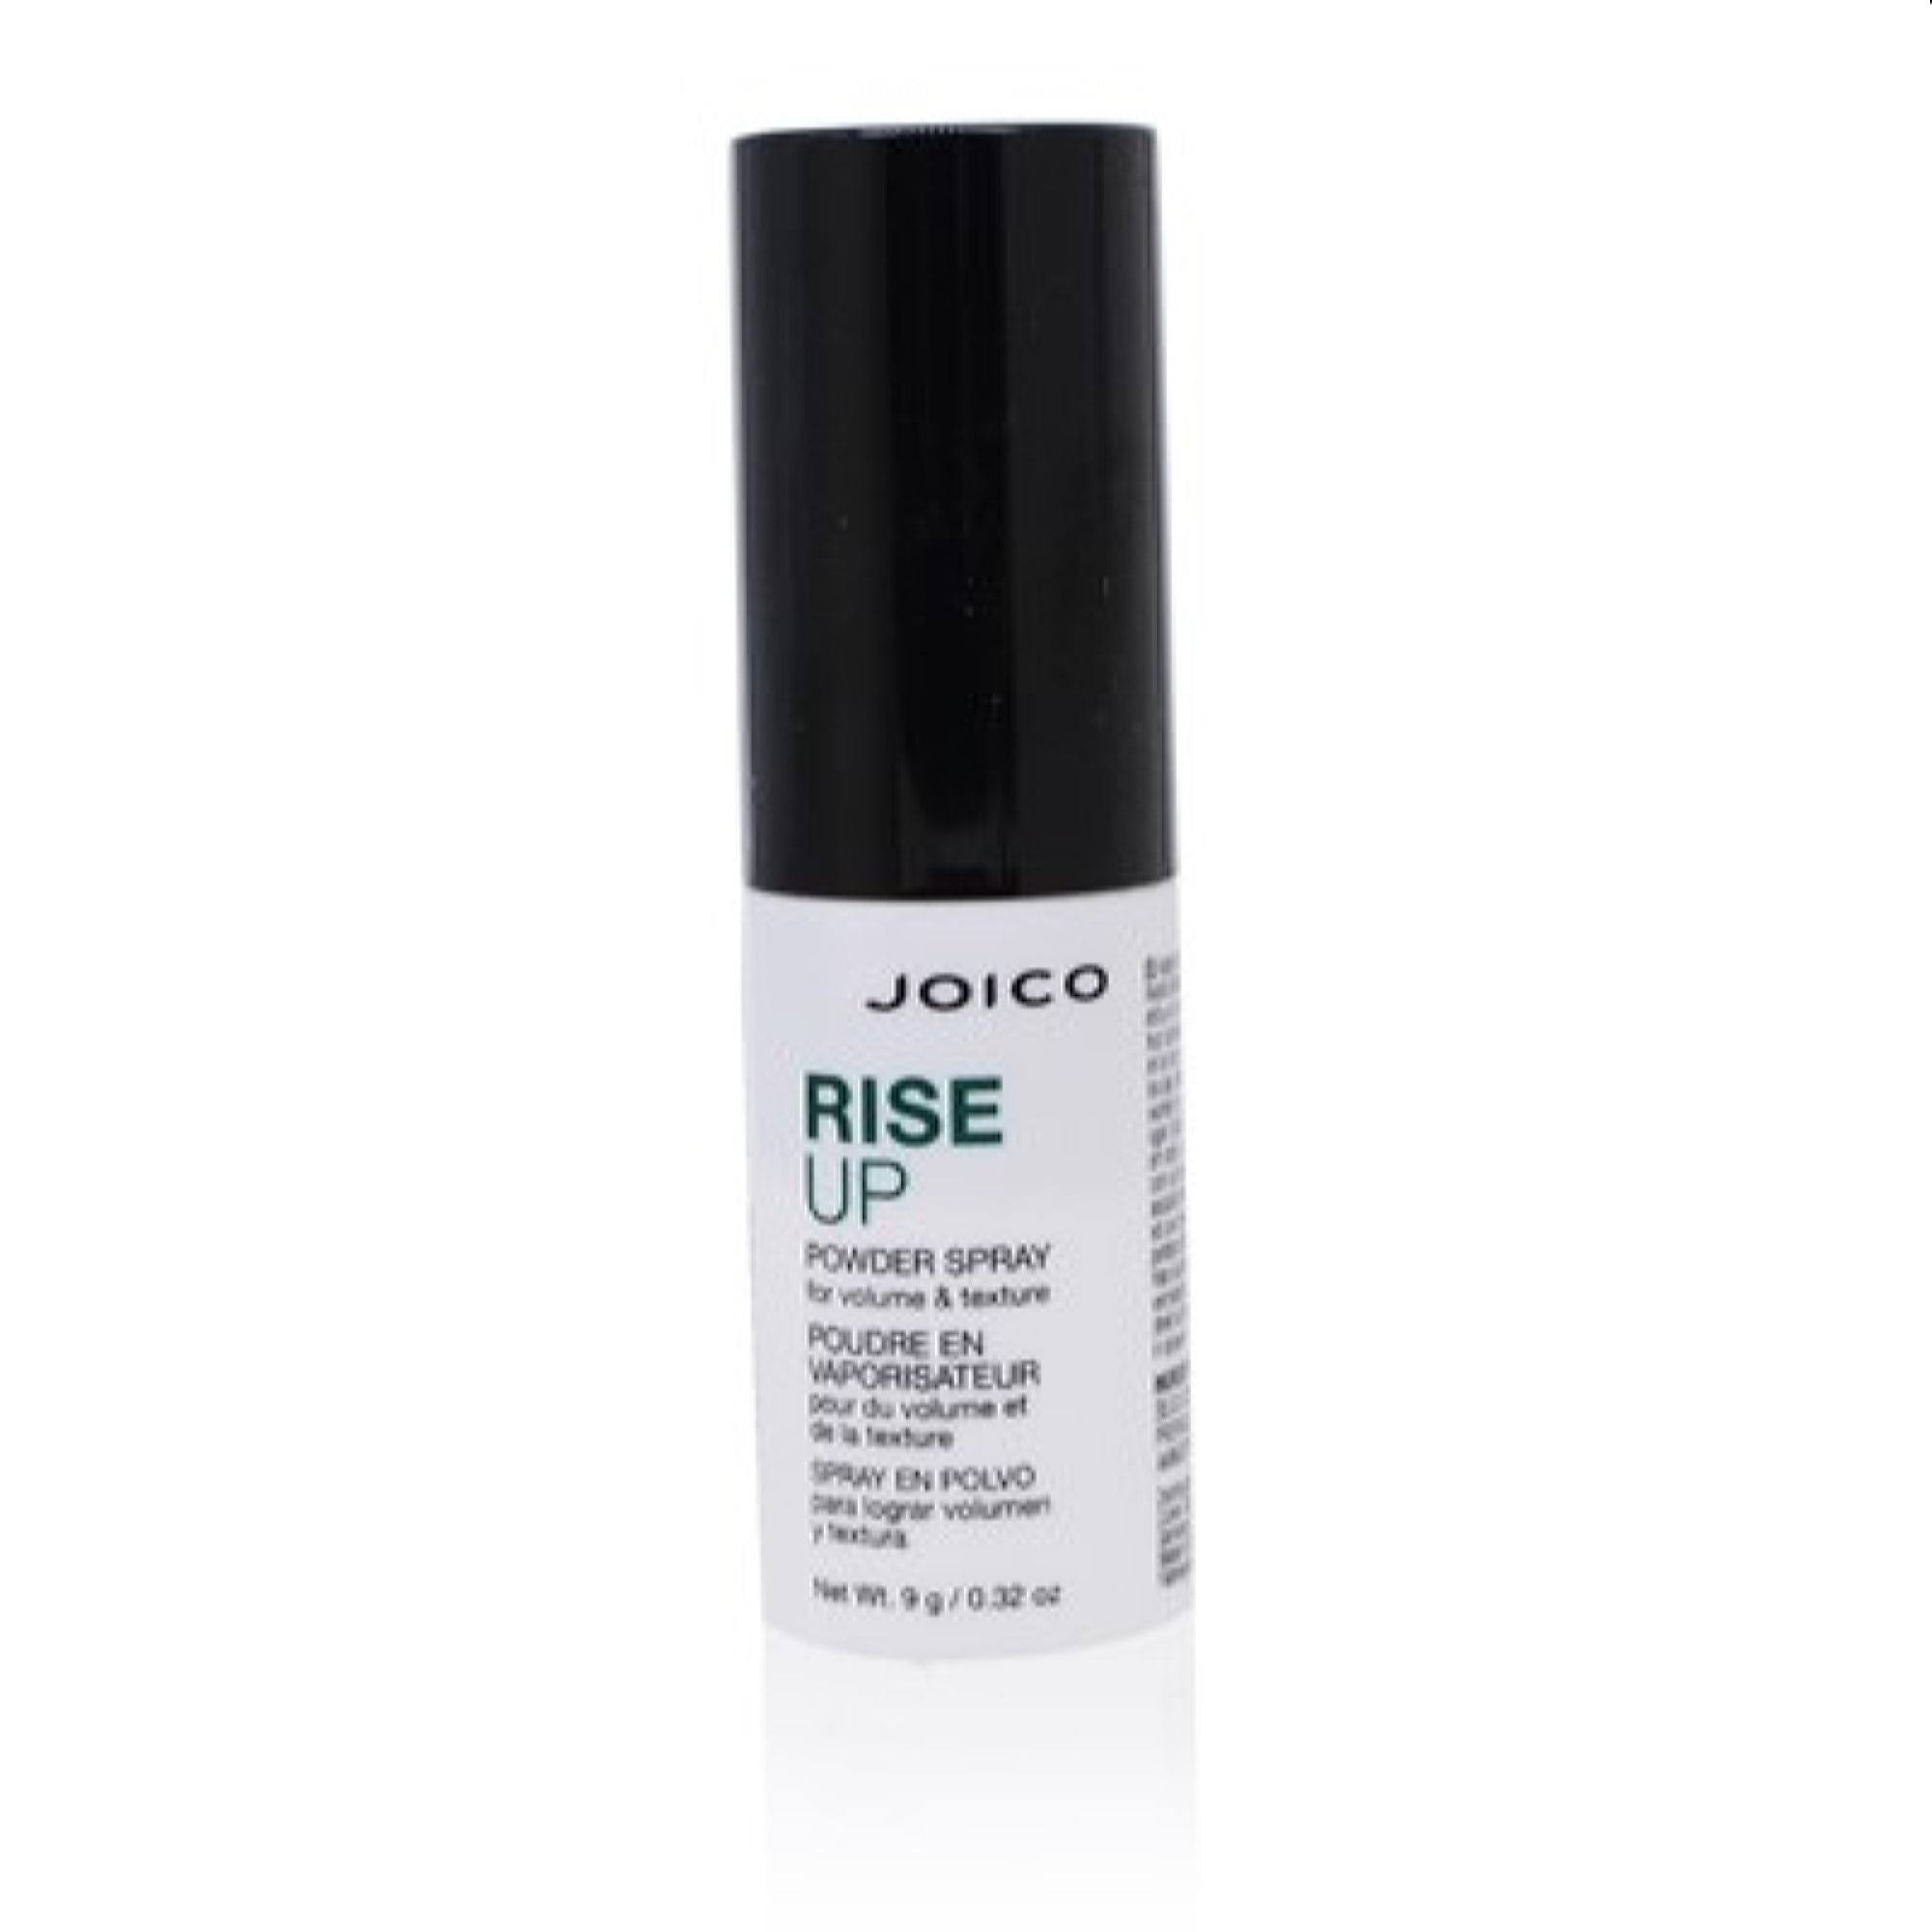 Joico Rise Up Powder Spray